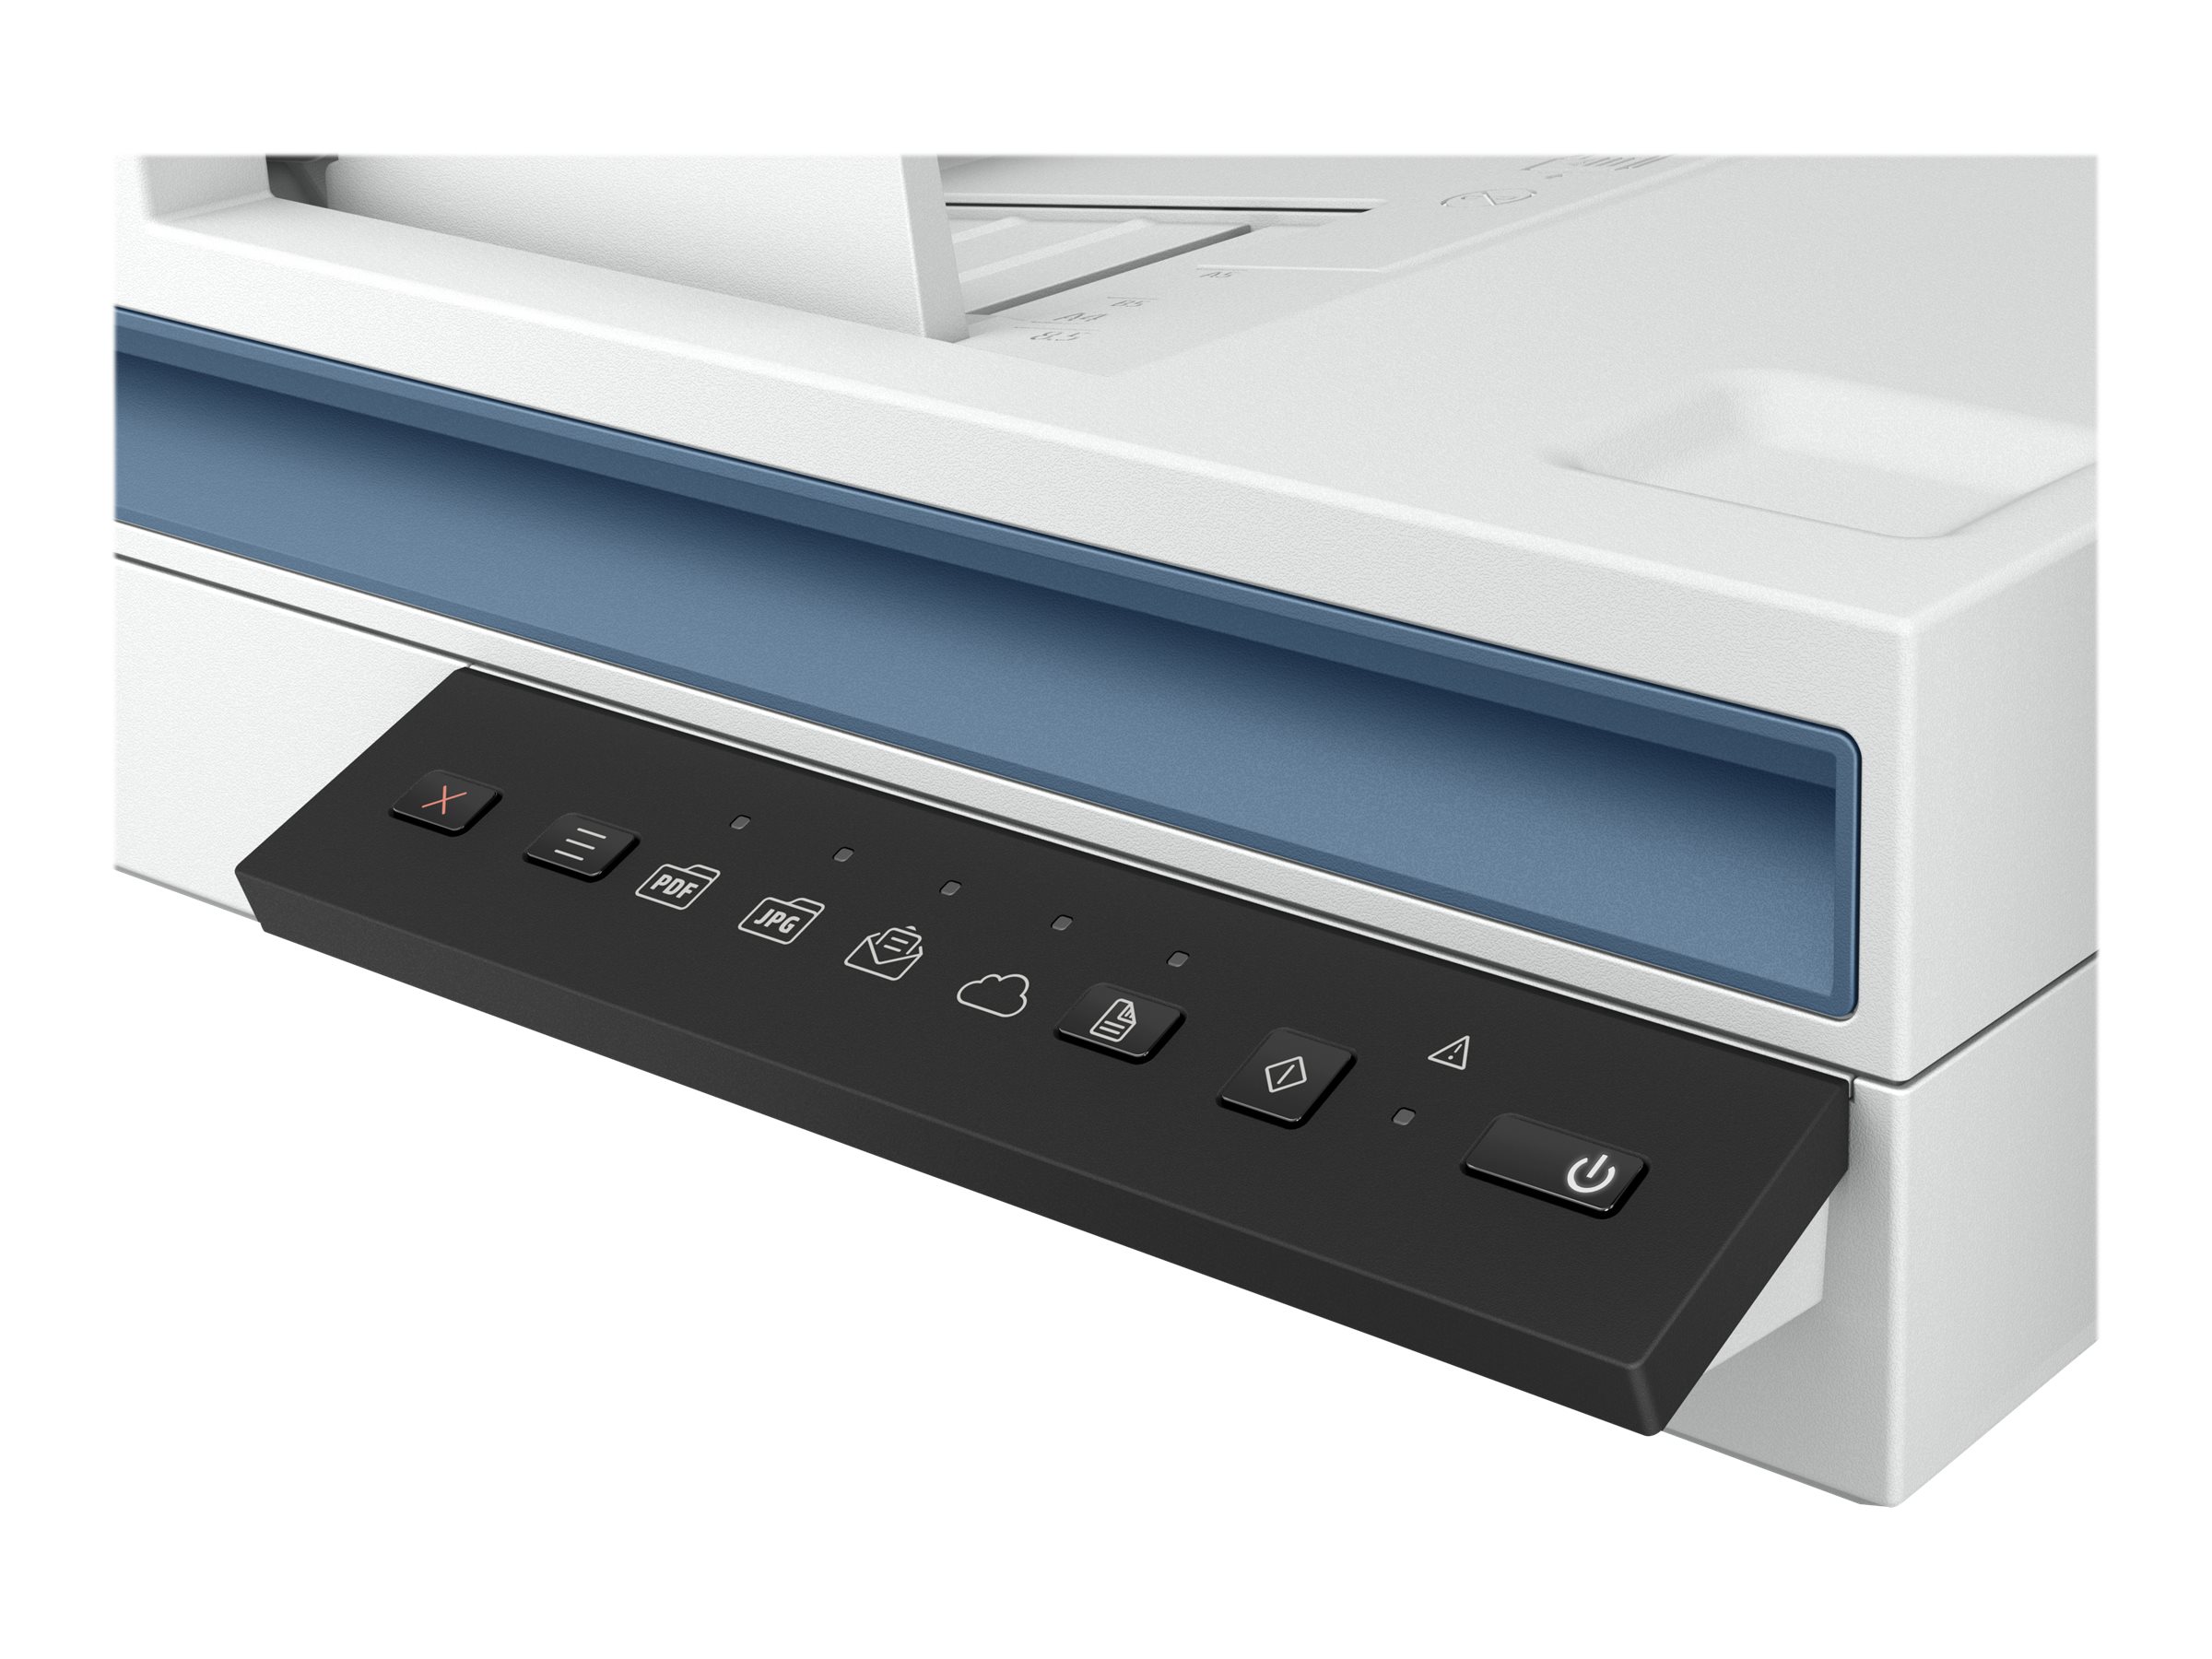 HP Scanjet Pro 3600 f1 - Dokumentenscanner - Contact Image Sensor (CIS)